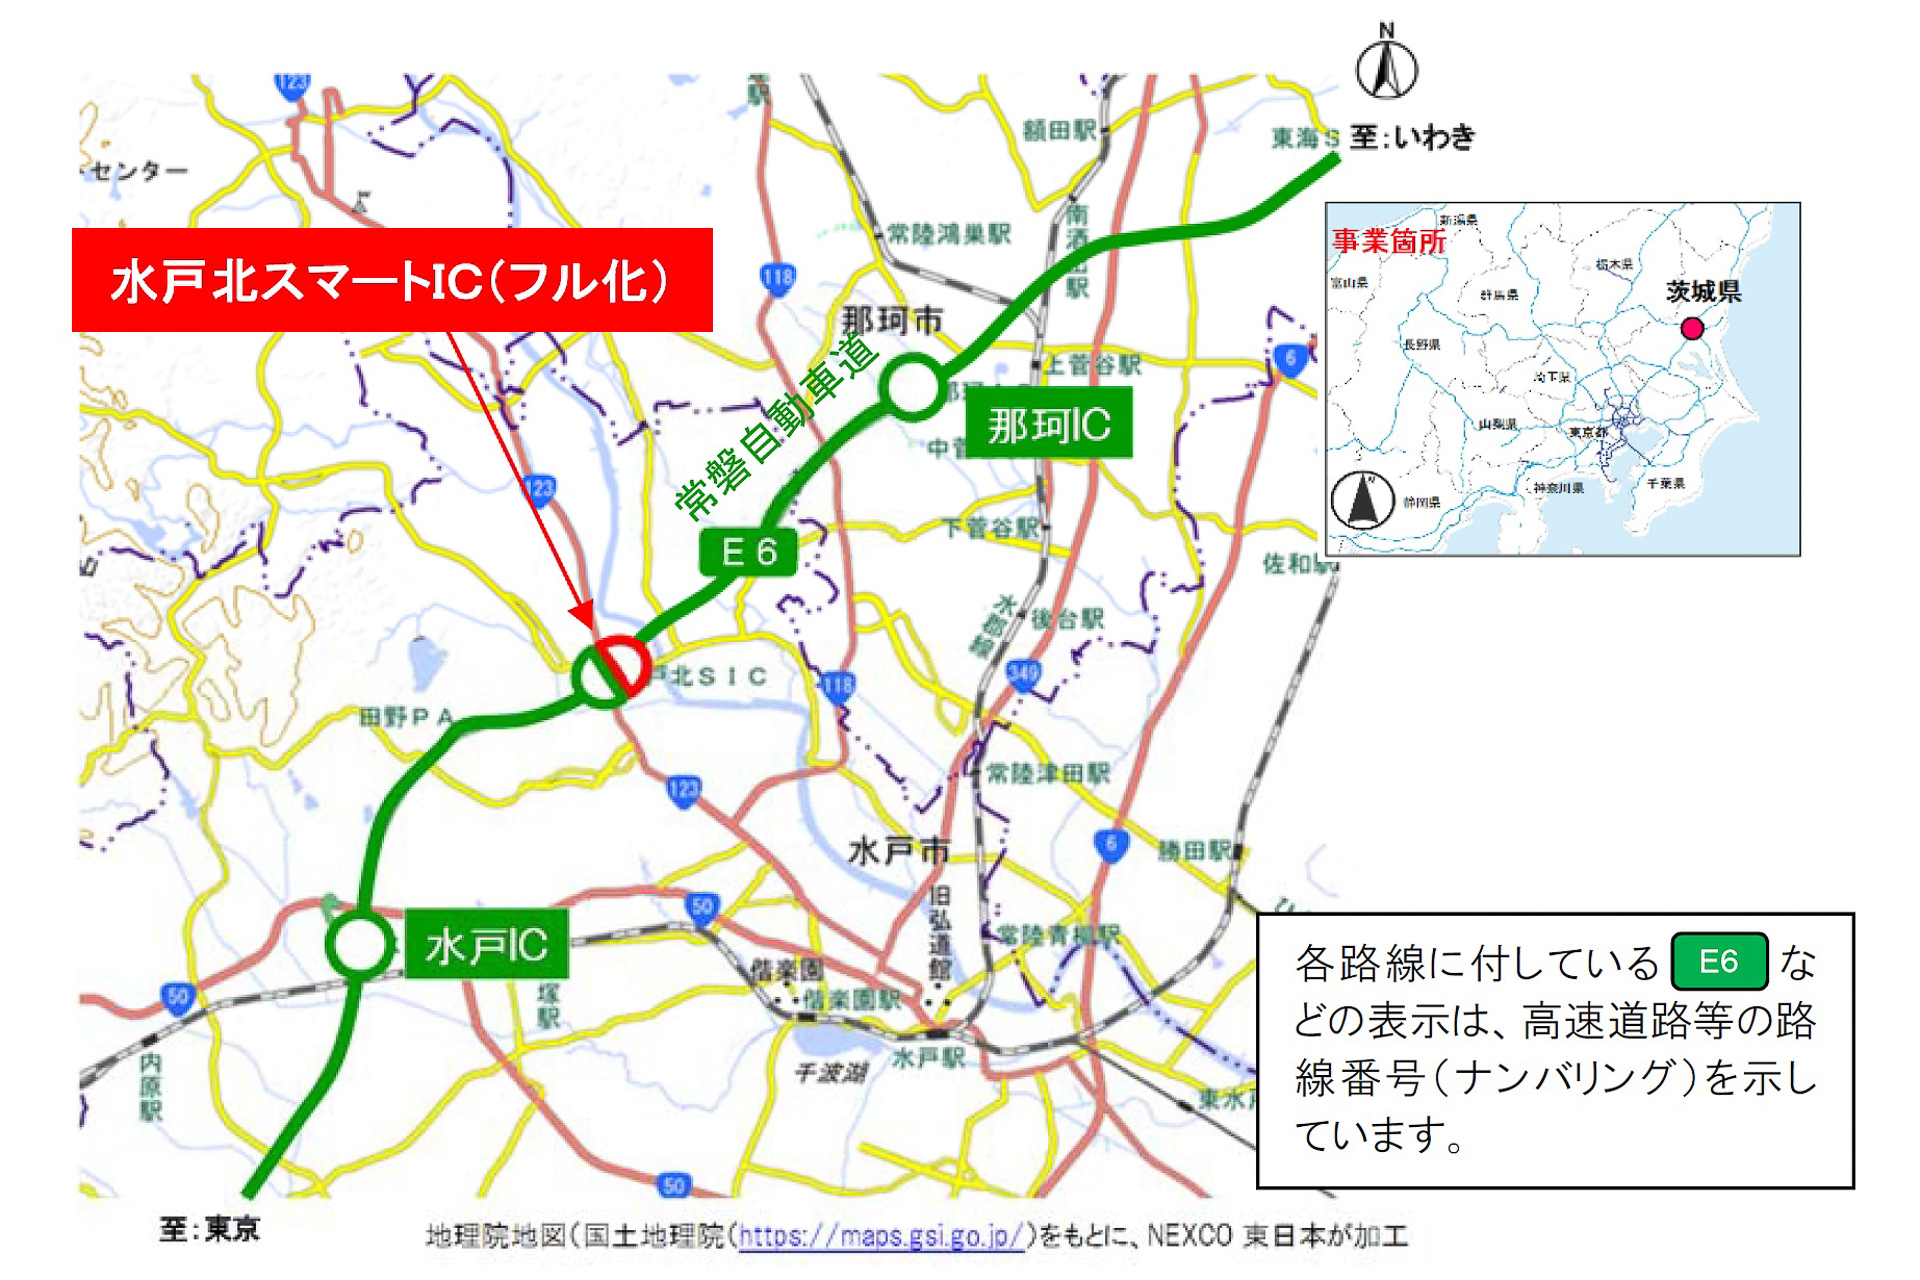 Nexco東日本 常磐道 水戸北スマートic で9月7日17時から いわき方面 も出入り可能に 東京方面と合わせてフルic化 トラベル Watch